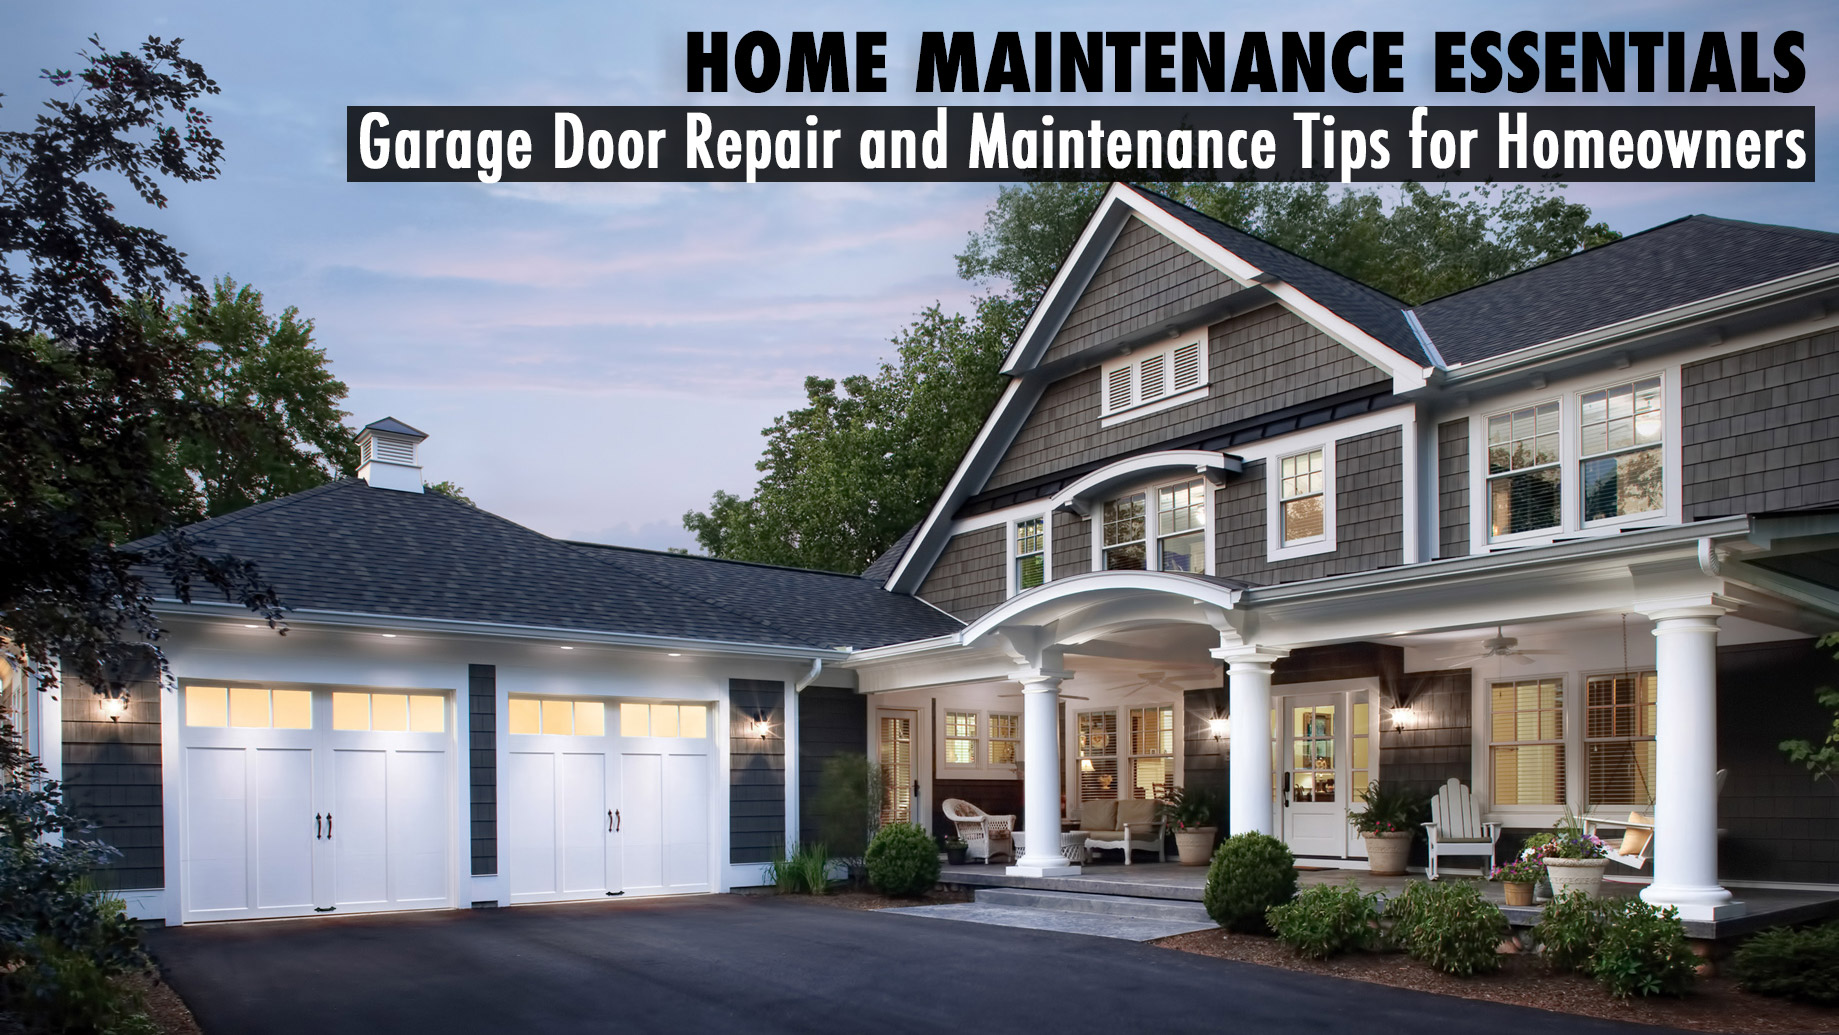 Home Maintenance Essentials - Garage Door Repair and Maintenance Tips for Homeowners